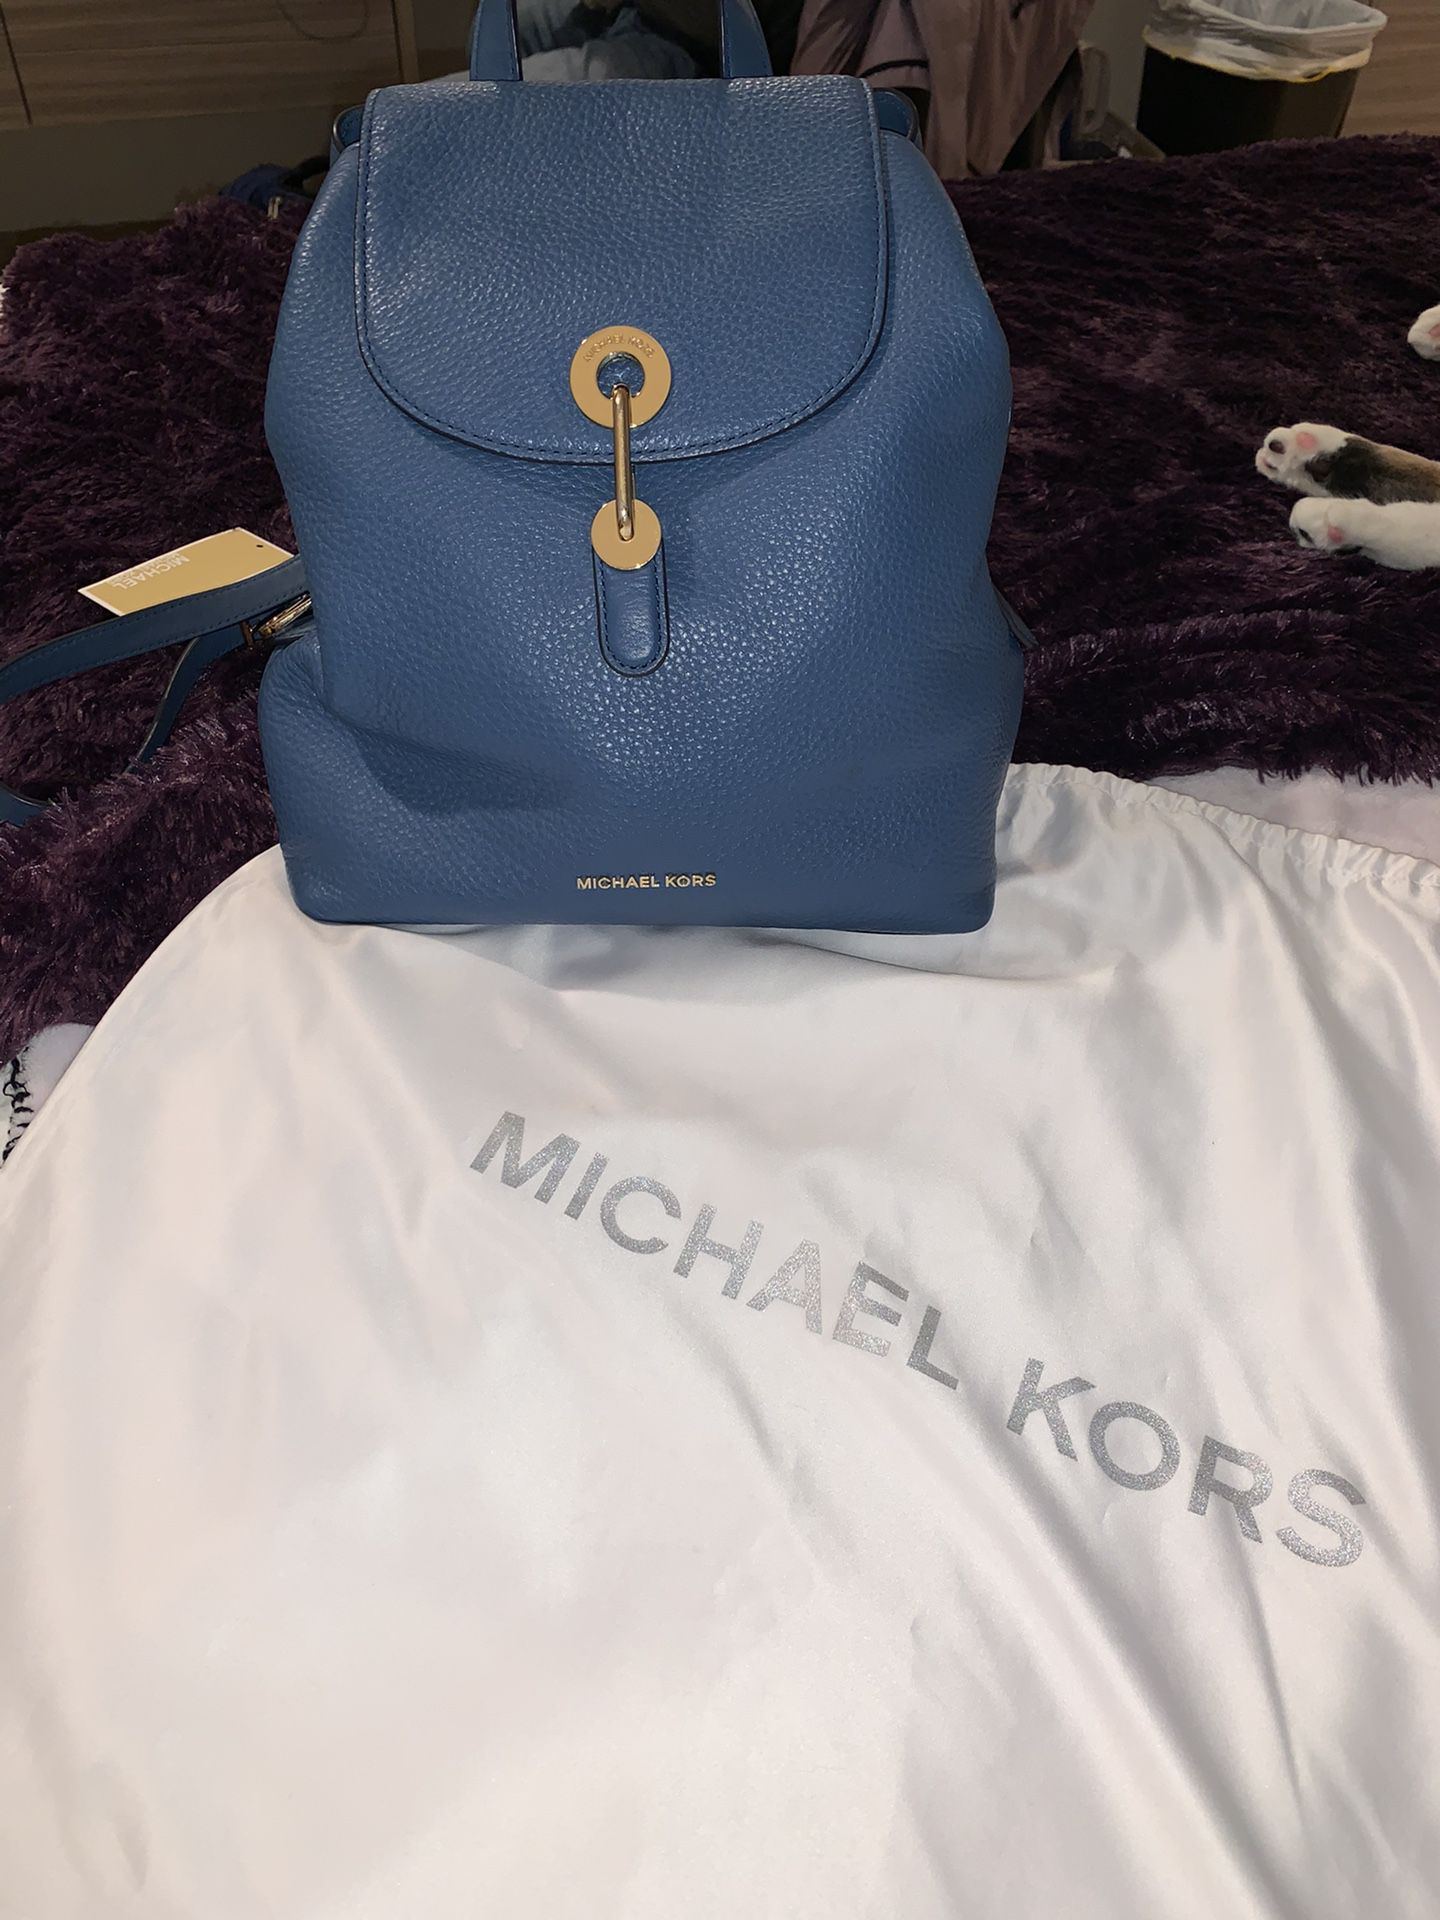 Michael Kors 2020 backpack